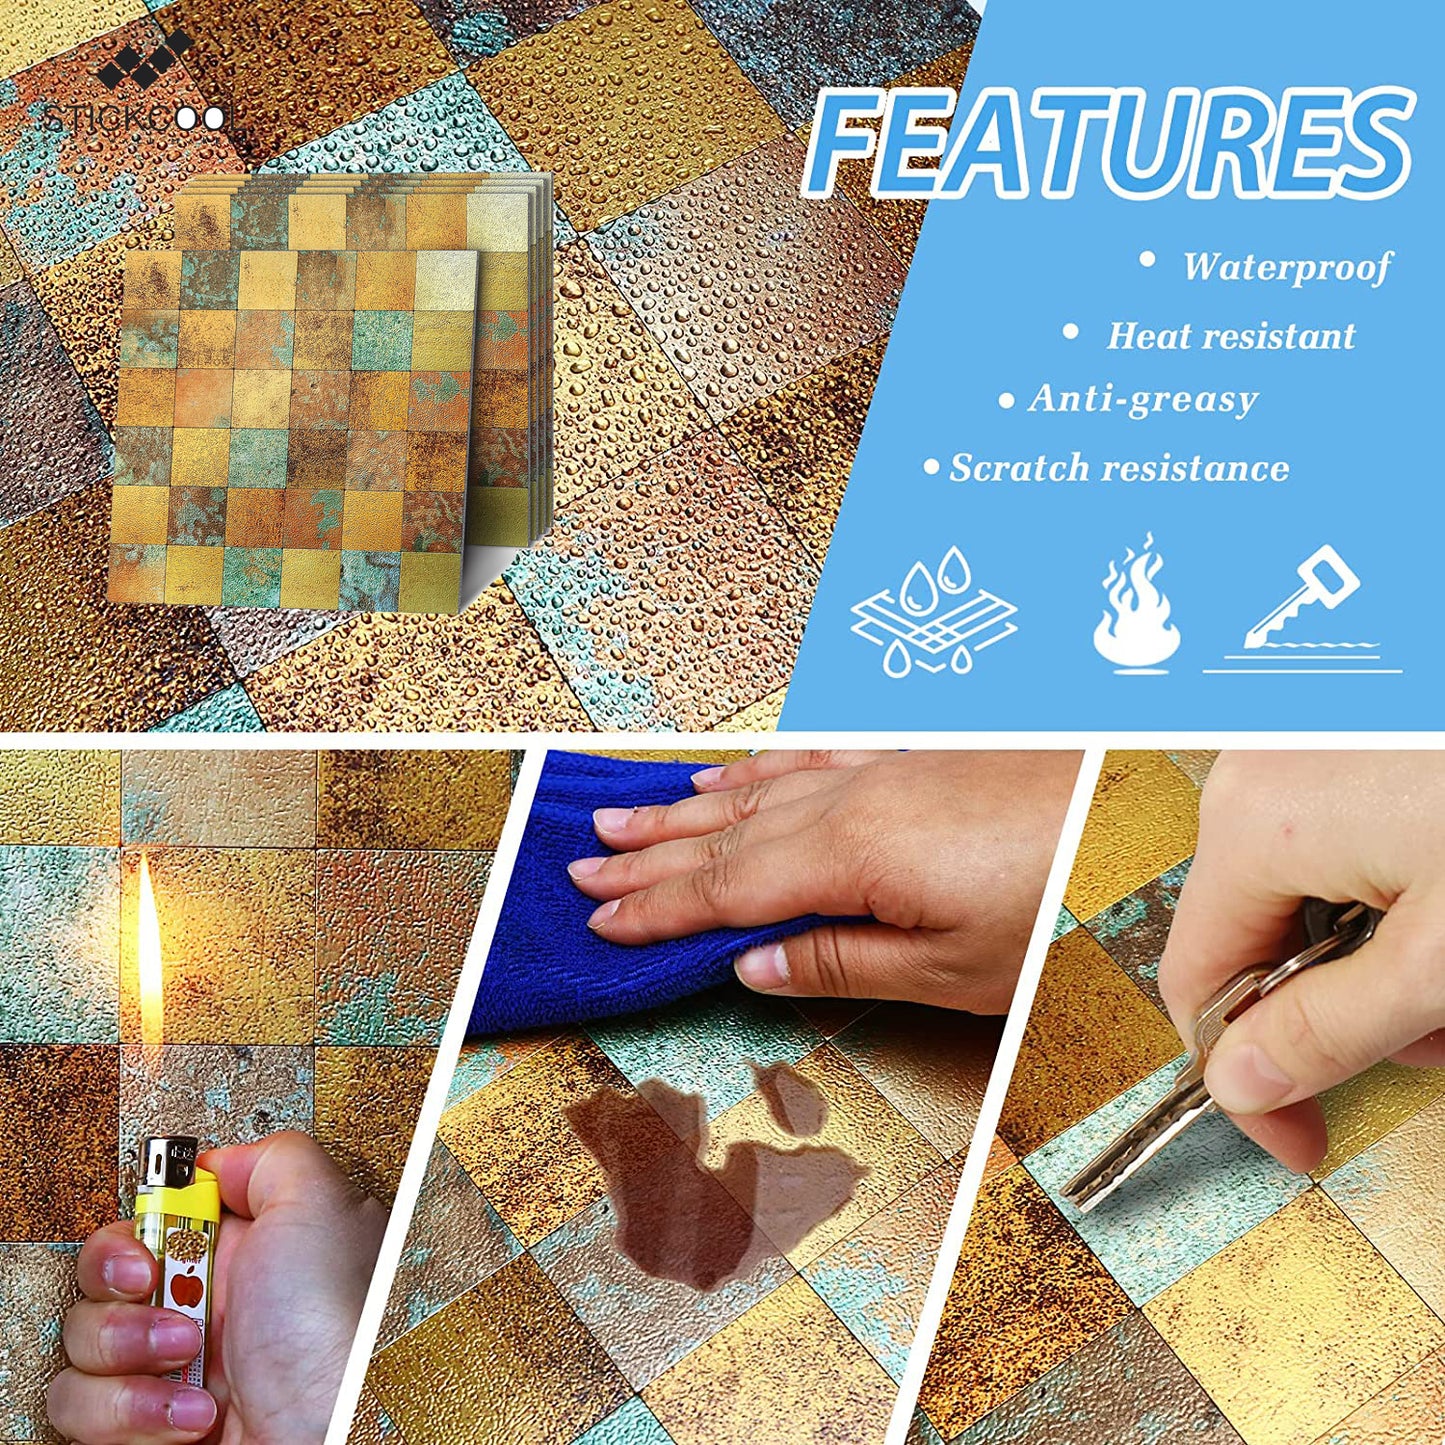 Backsplash Tile for Kitchen Peel and Stick, Rust Classical Retro Copper Peel and Stick Backsplash, 5 Sheets Self-Adhesive Aluminum Mosaic Tile